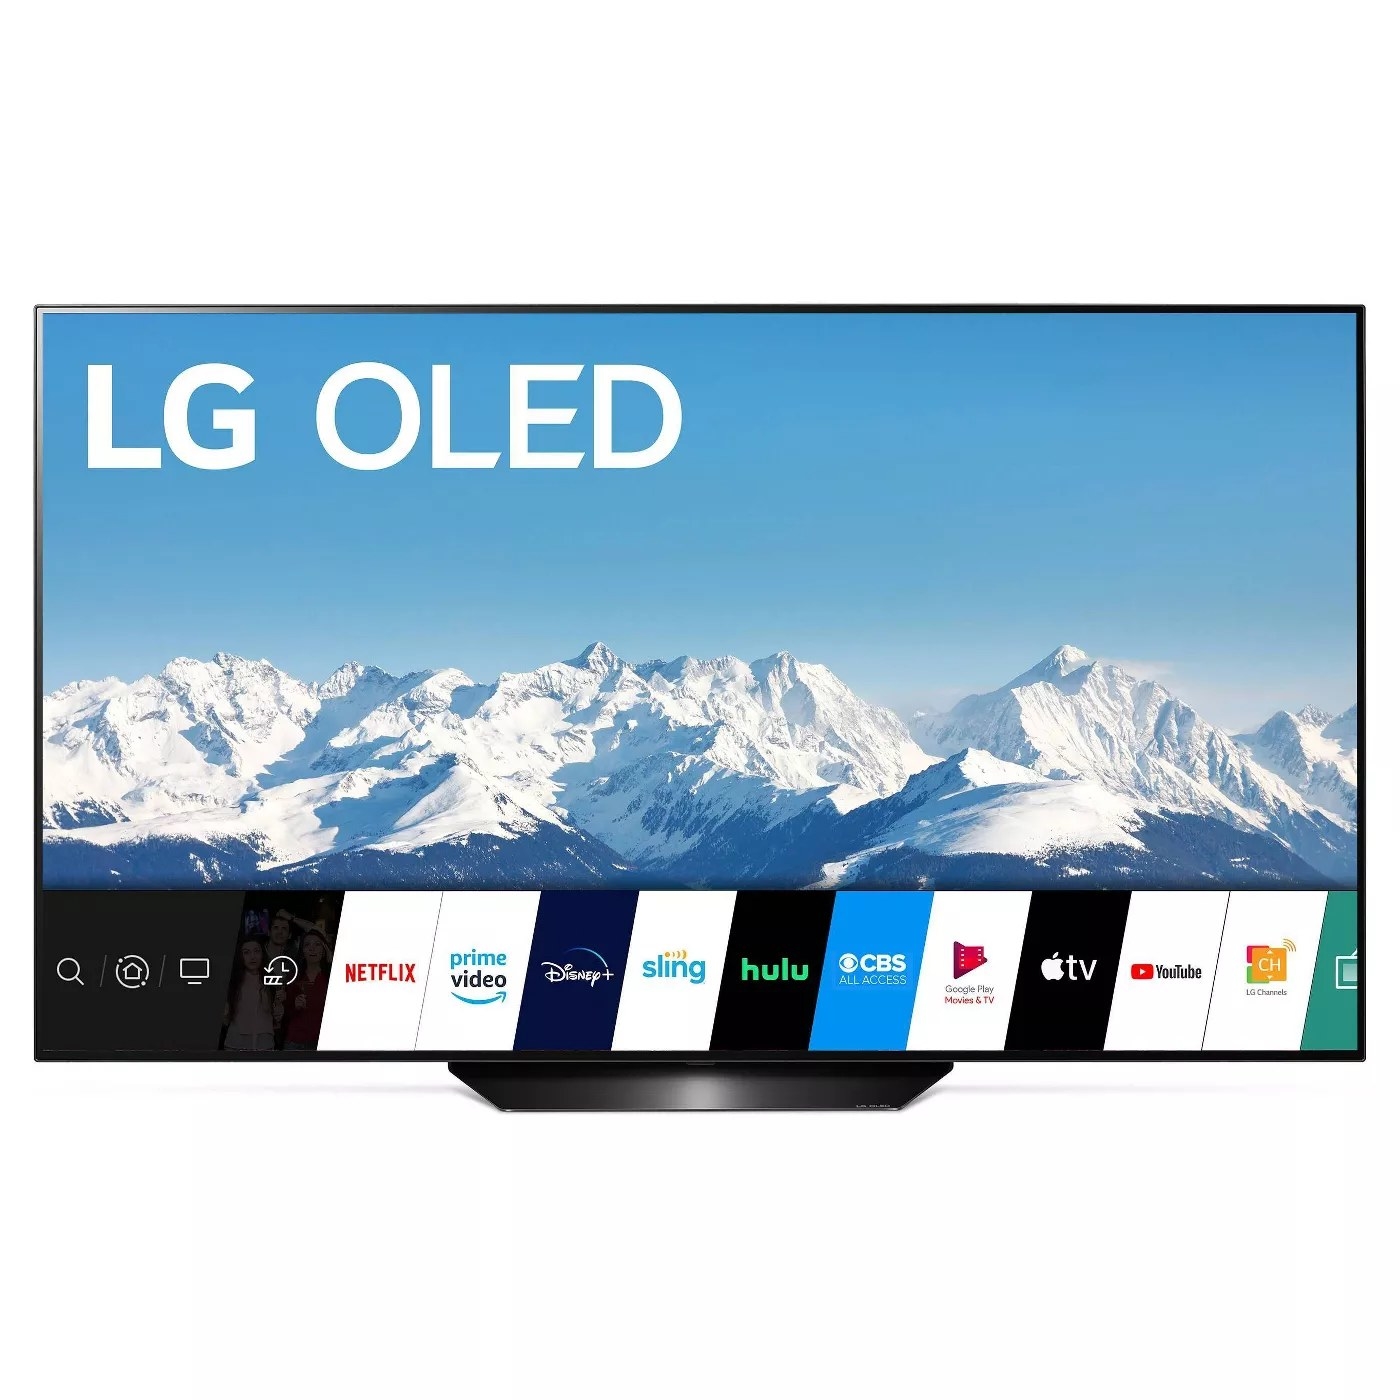 The LG OLED